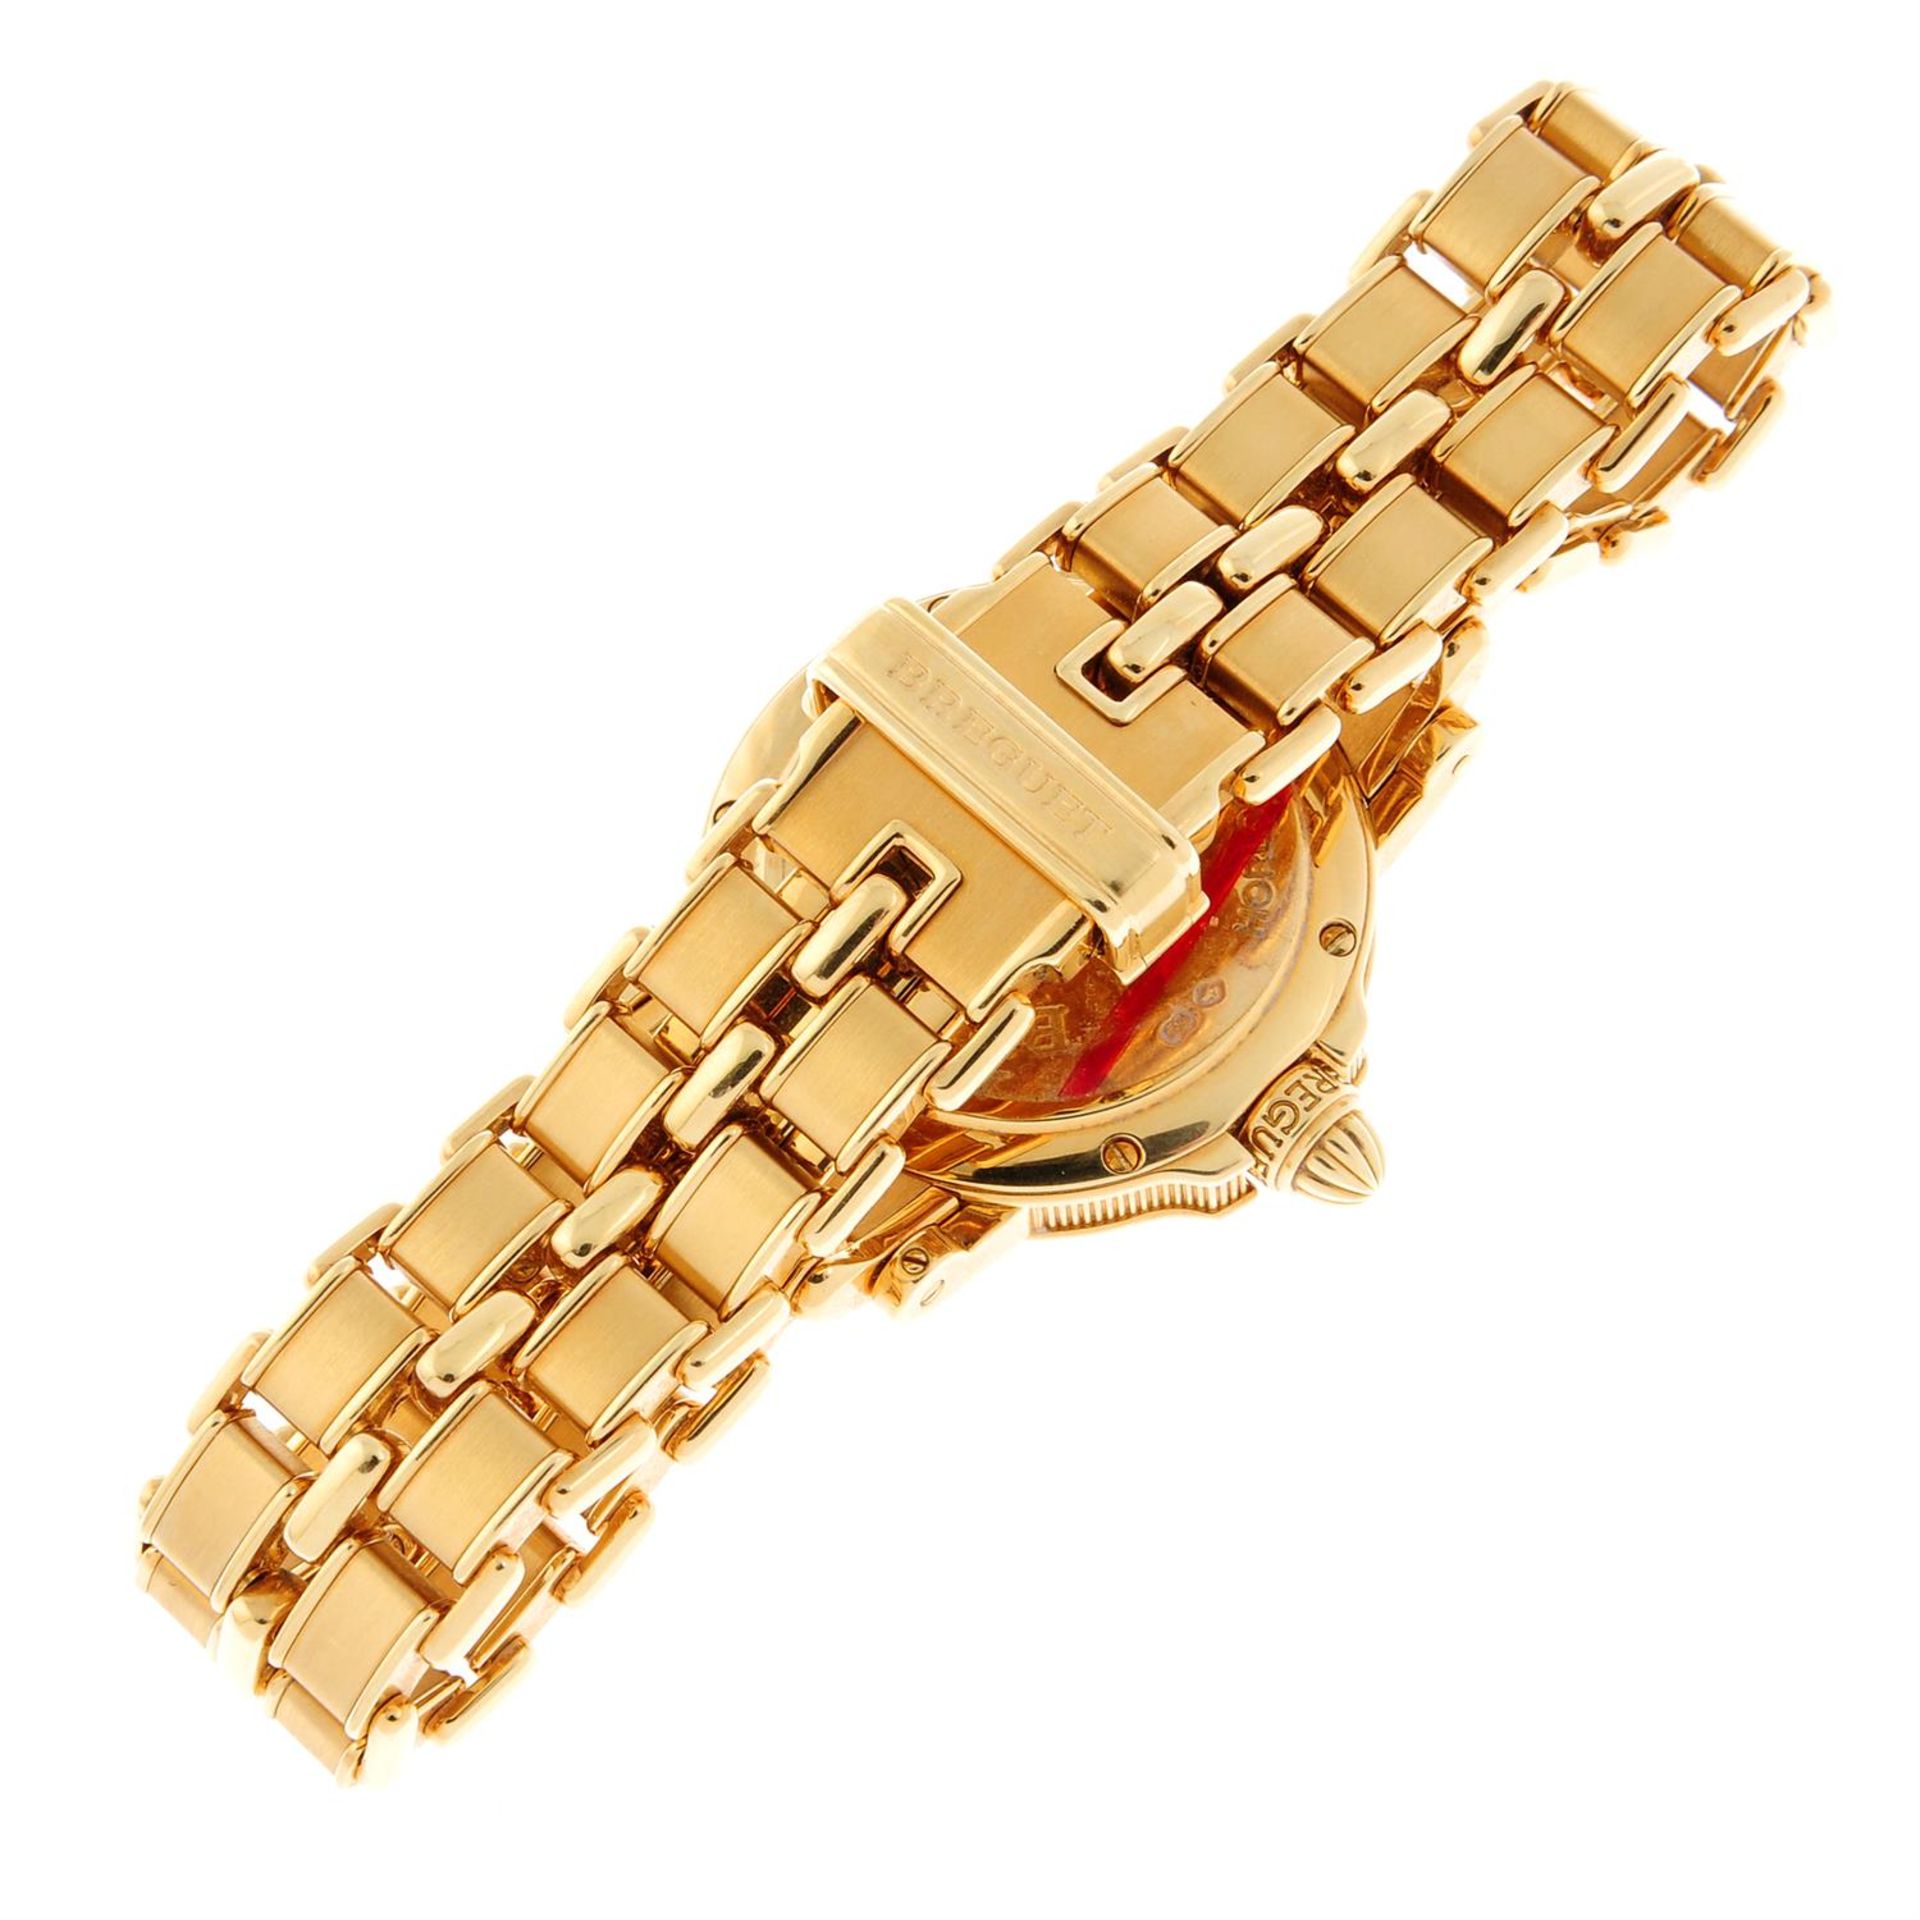 BREGUET - a diamond set 18ct yellow gold Horloger De La Marine bracelet watch, 26mm. - Bild 2 aus 7